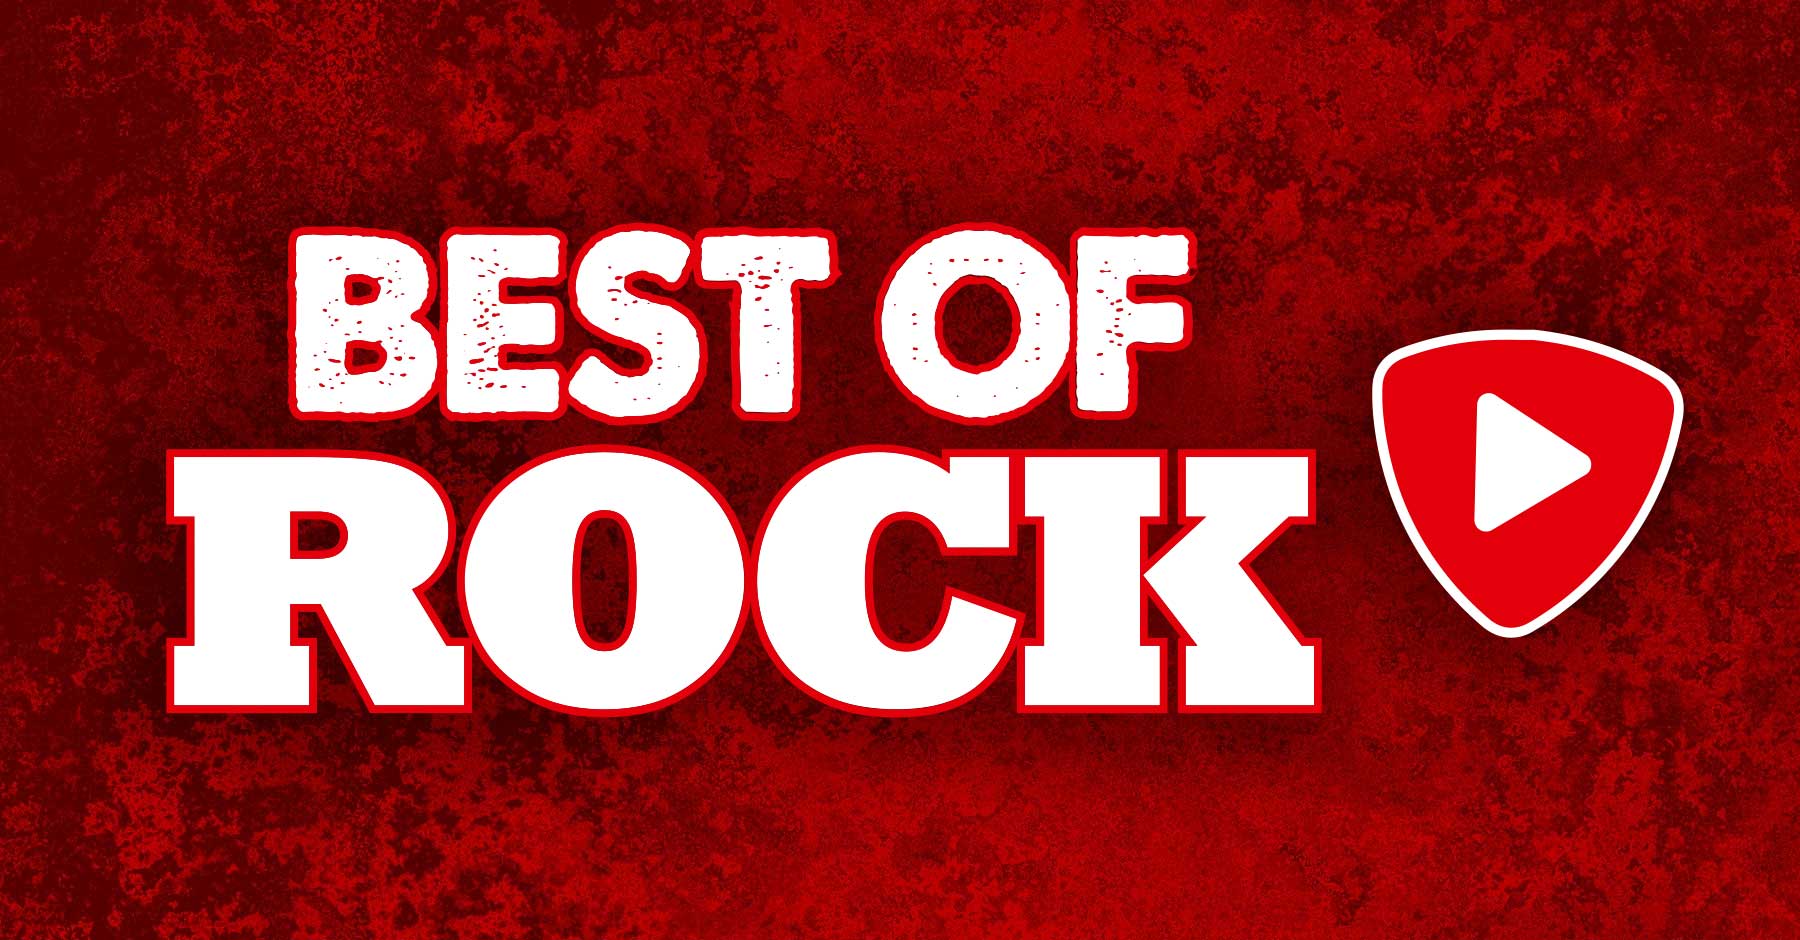 (c) Best-of-rock.fm